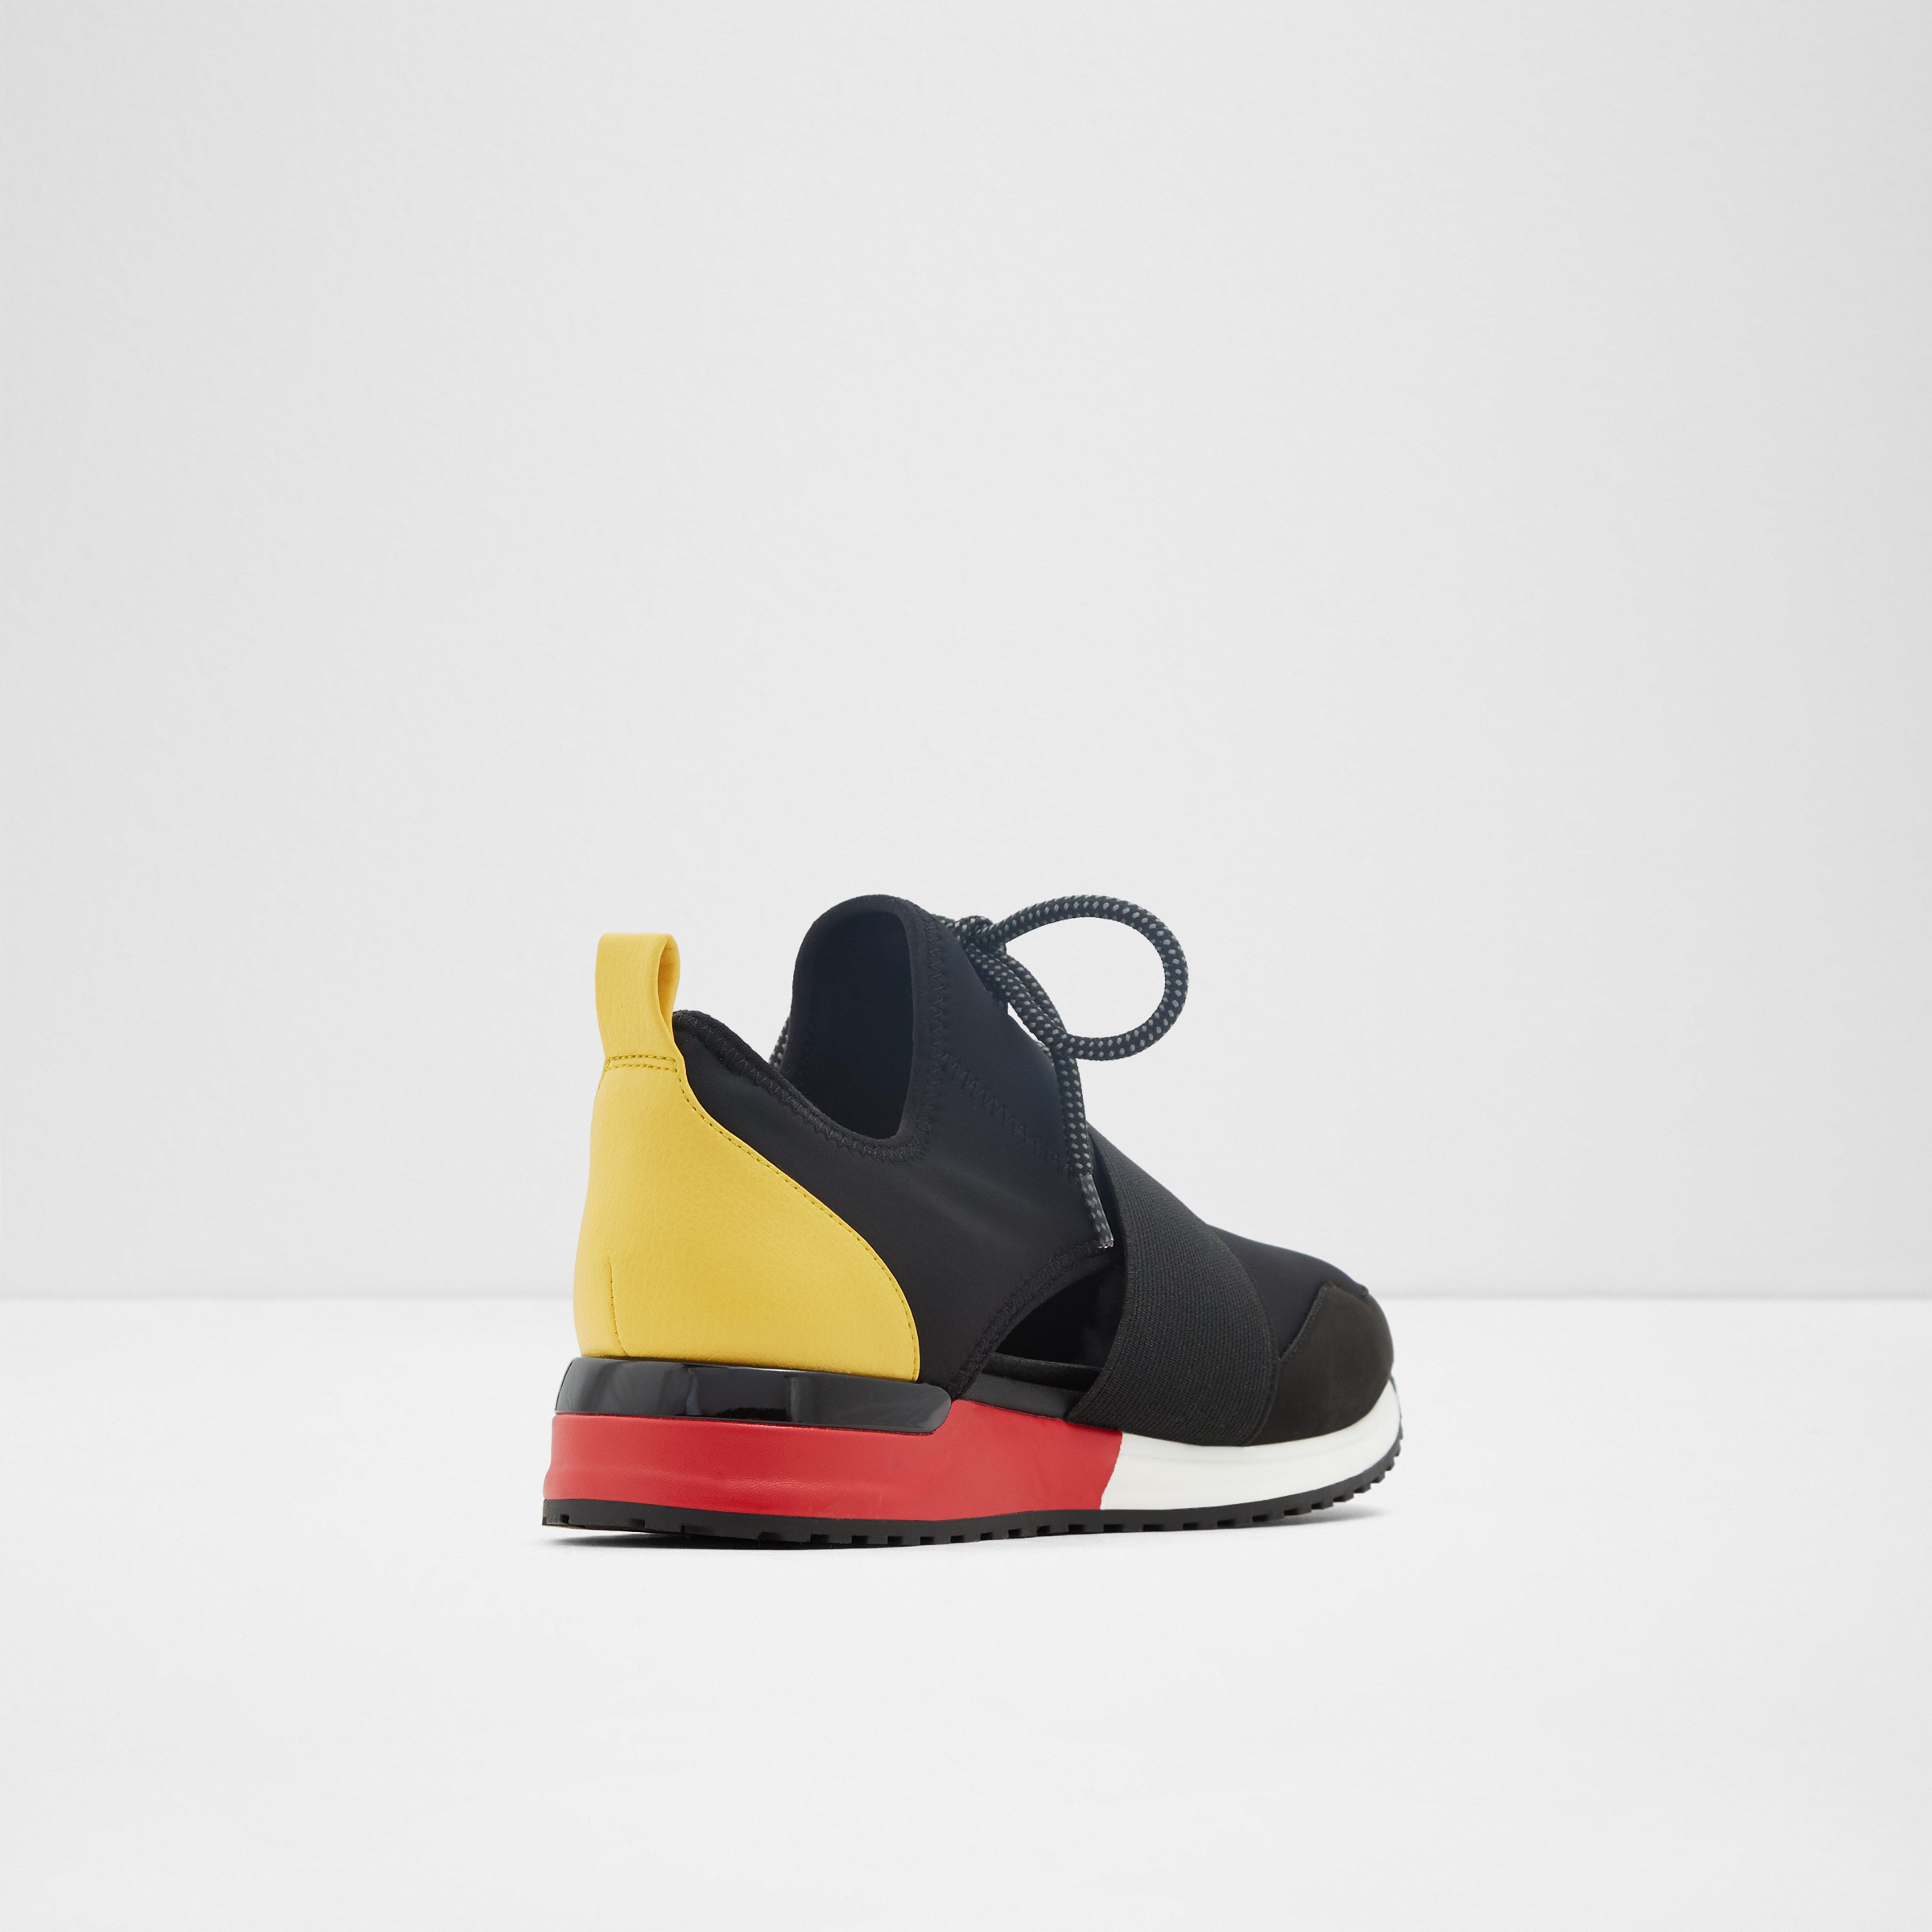 Aldo | Shoes | Aldo Sneakers Red Size 65 | Poshmark